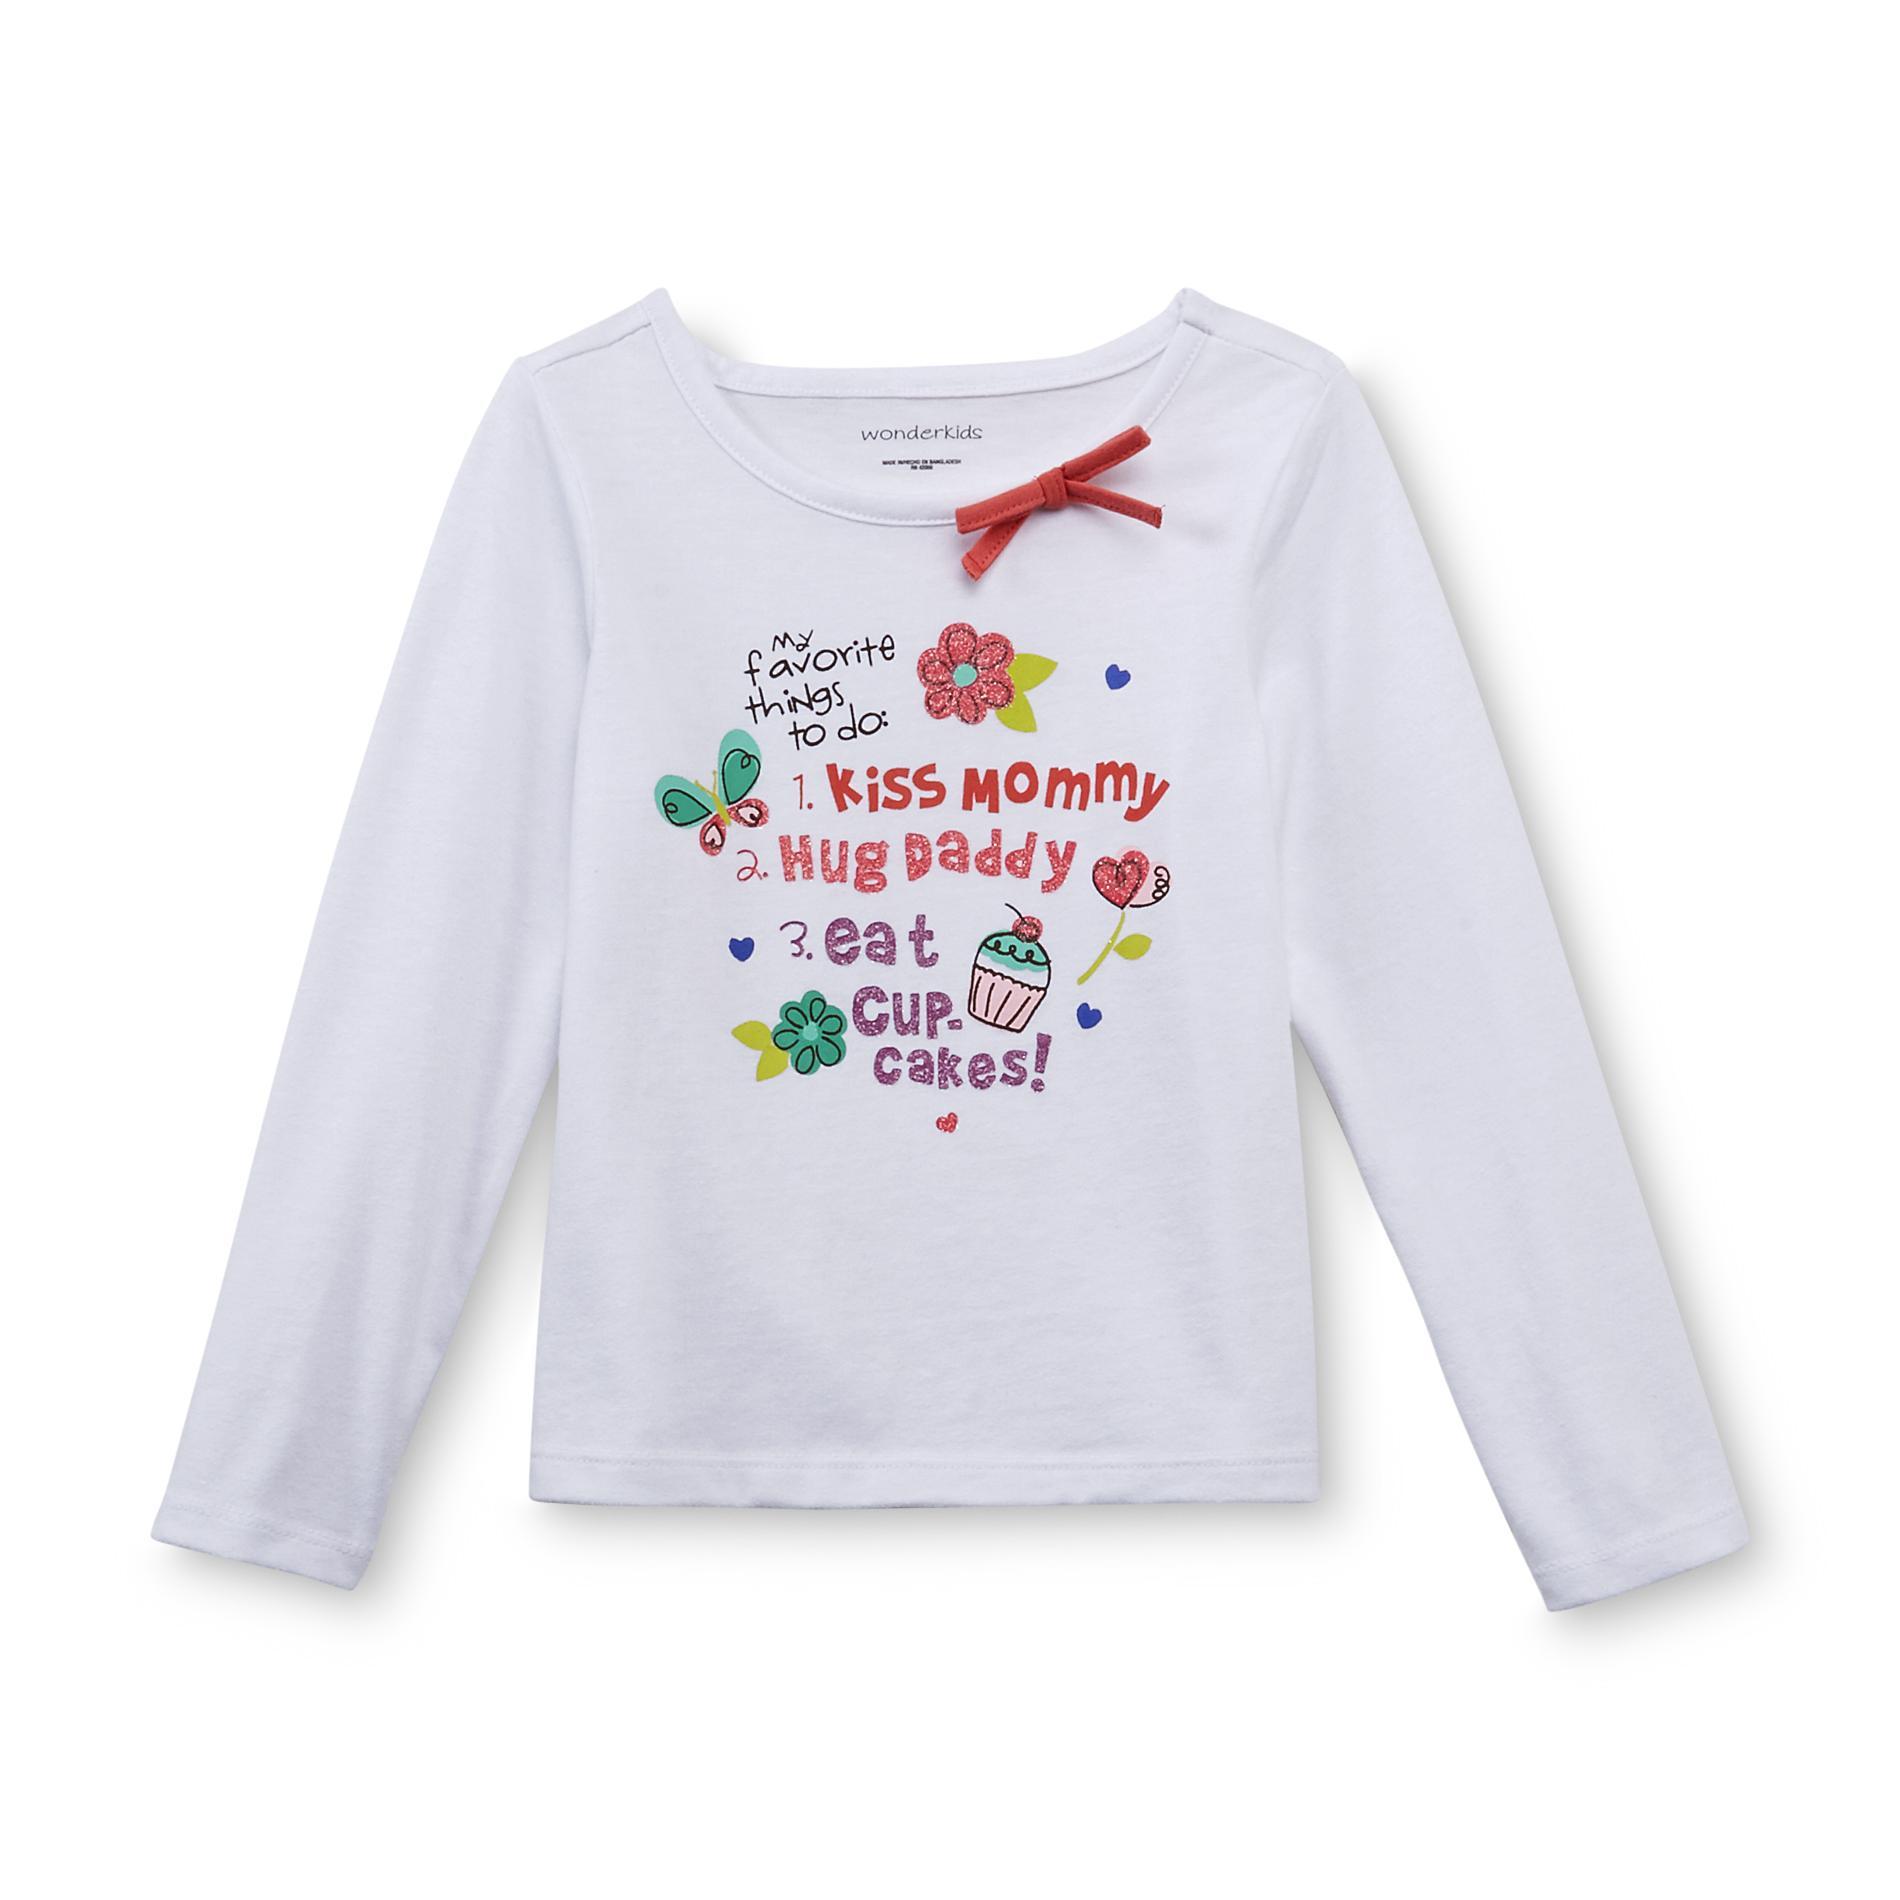 WonderKids Infant & Toddler Girl's Long-Sleeve T-Shirt - Cupcakes